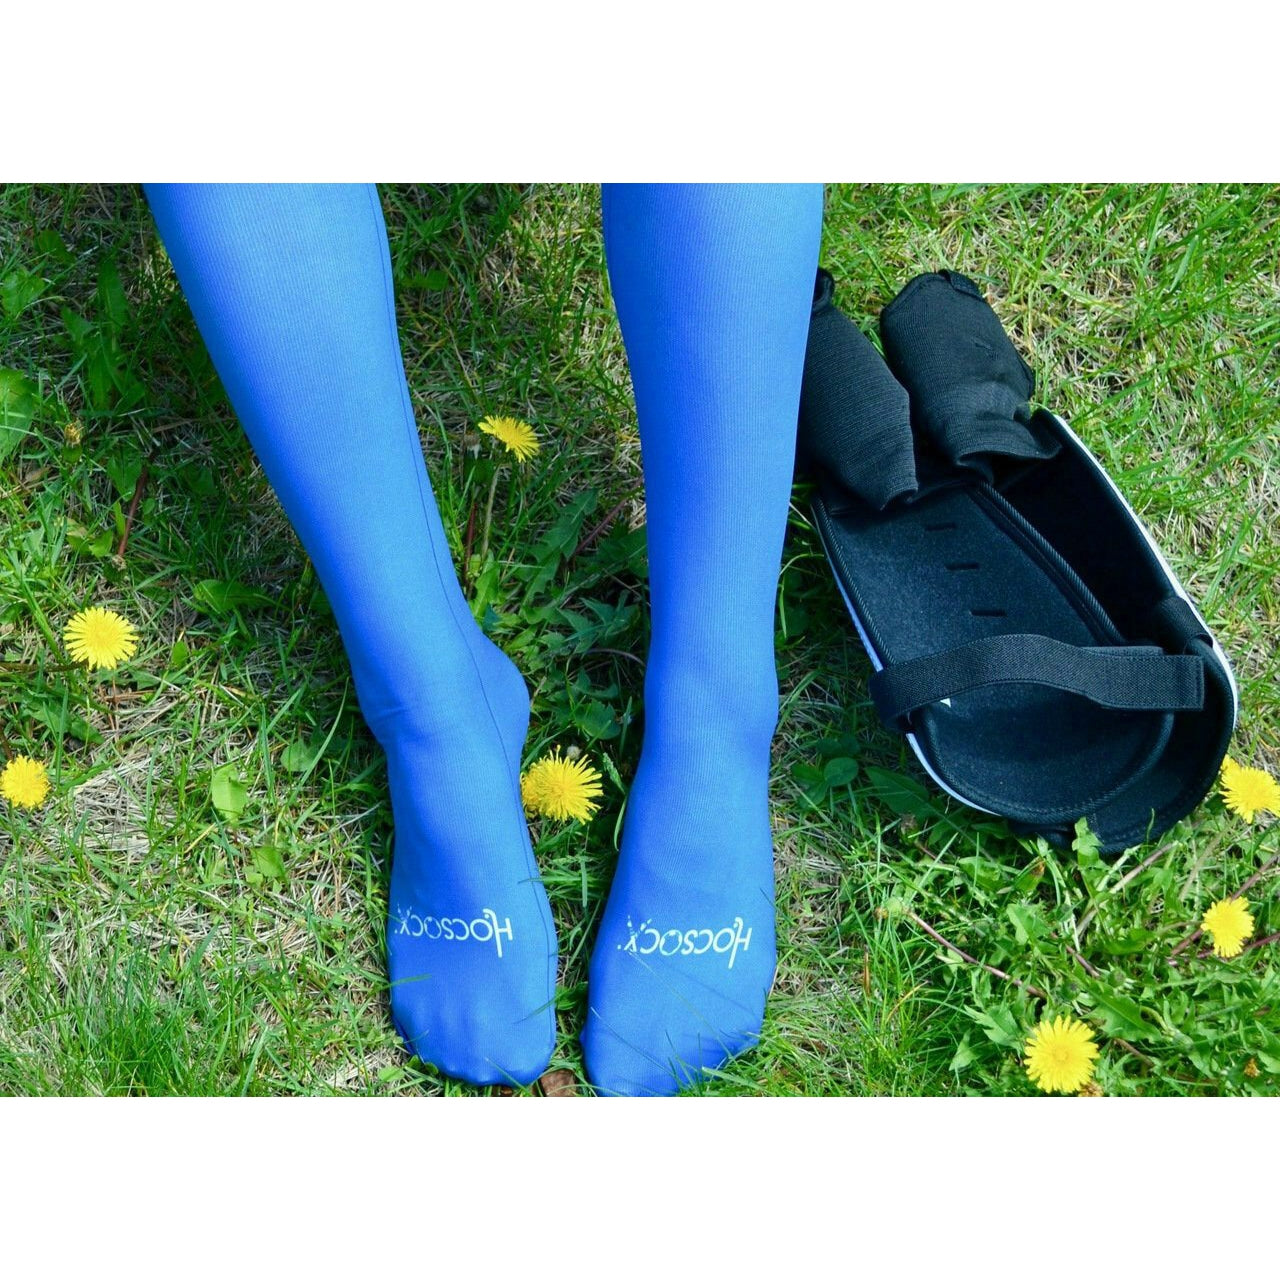 Hocsocx Royal Blue Performance Shin Guard Rash Liner Sport Socks